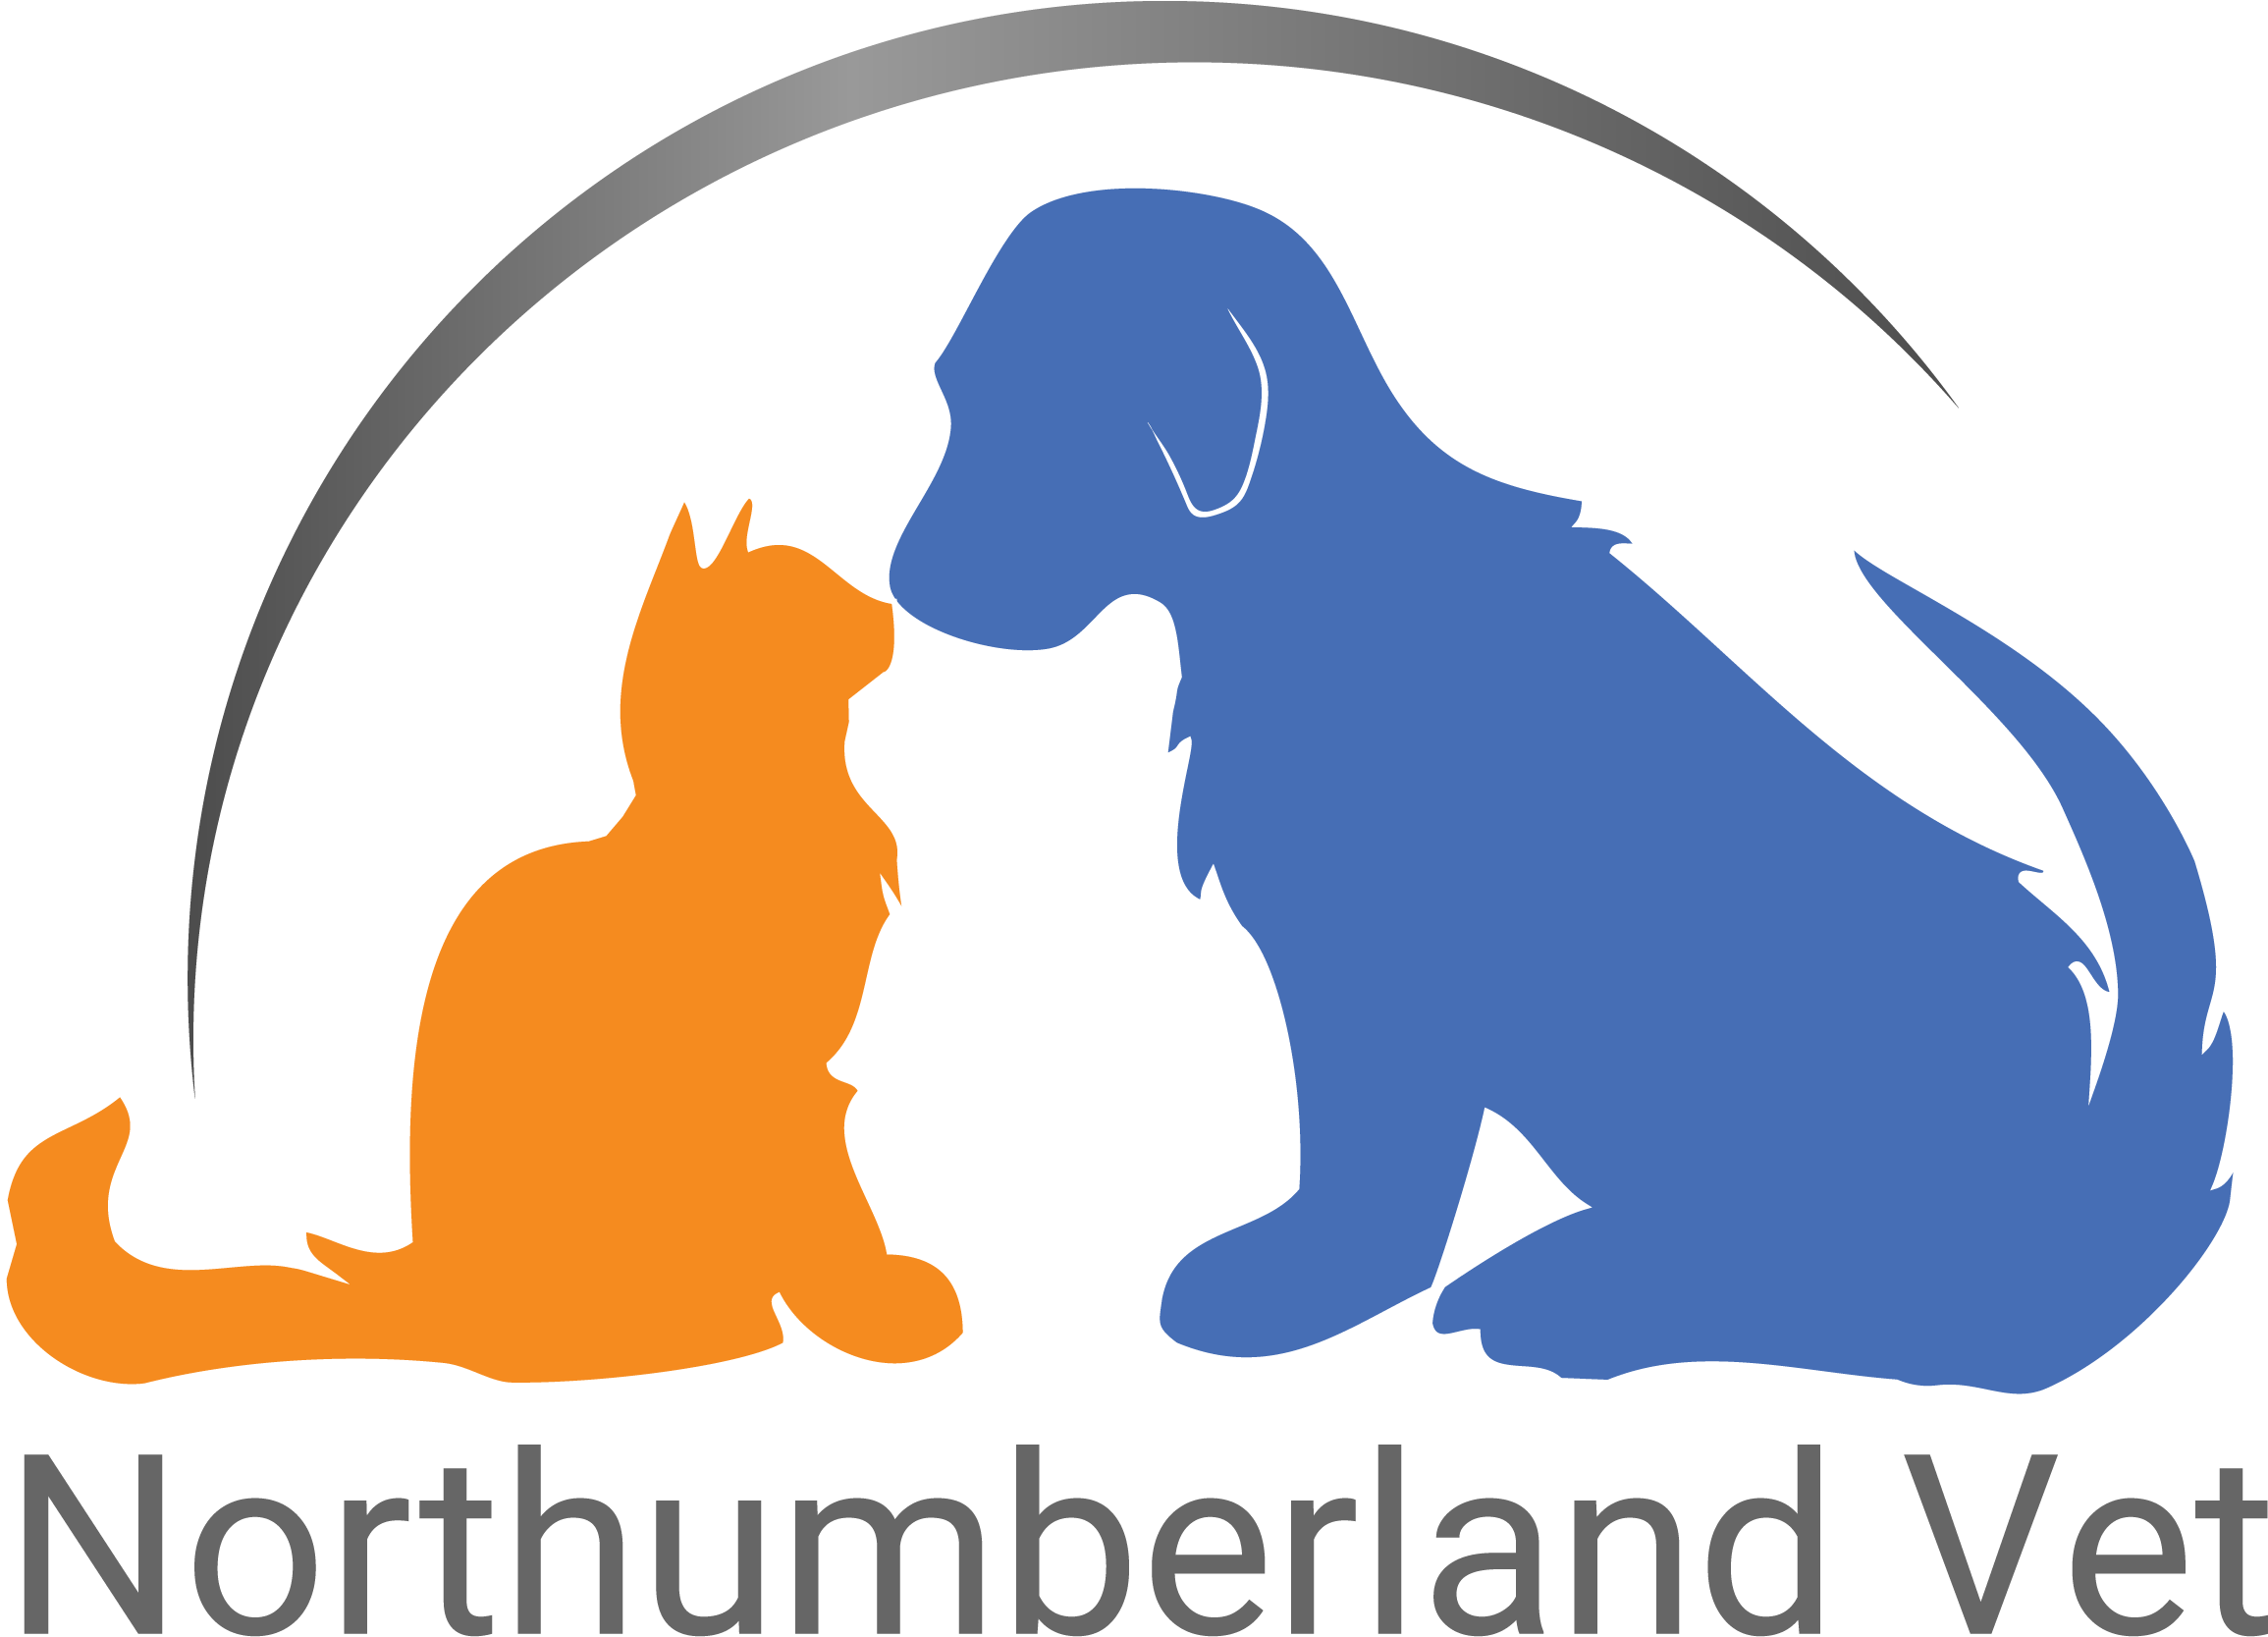 Northumberland Veterinary Services Northumberland Veterinary - Northumberland Veterinary Services (2318x1732)